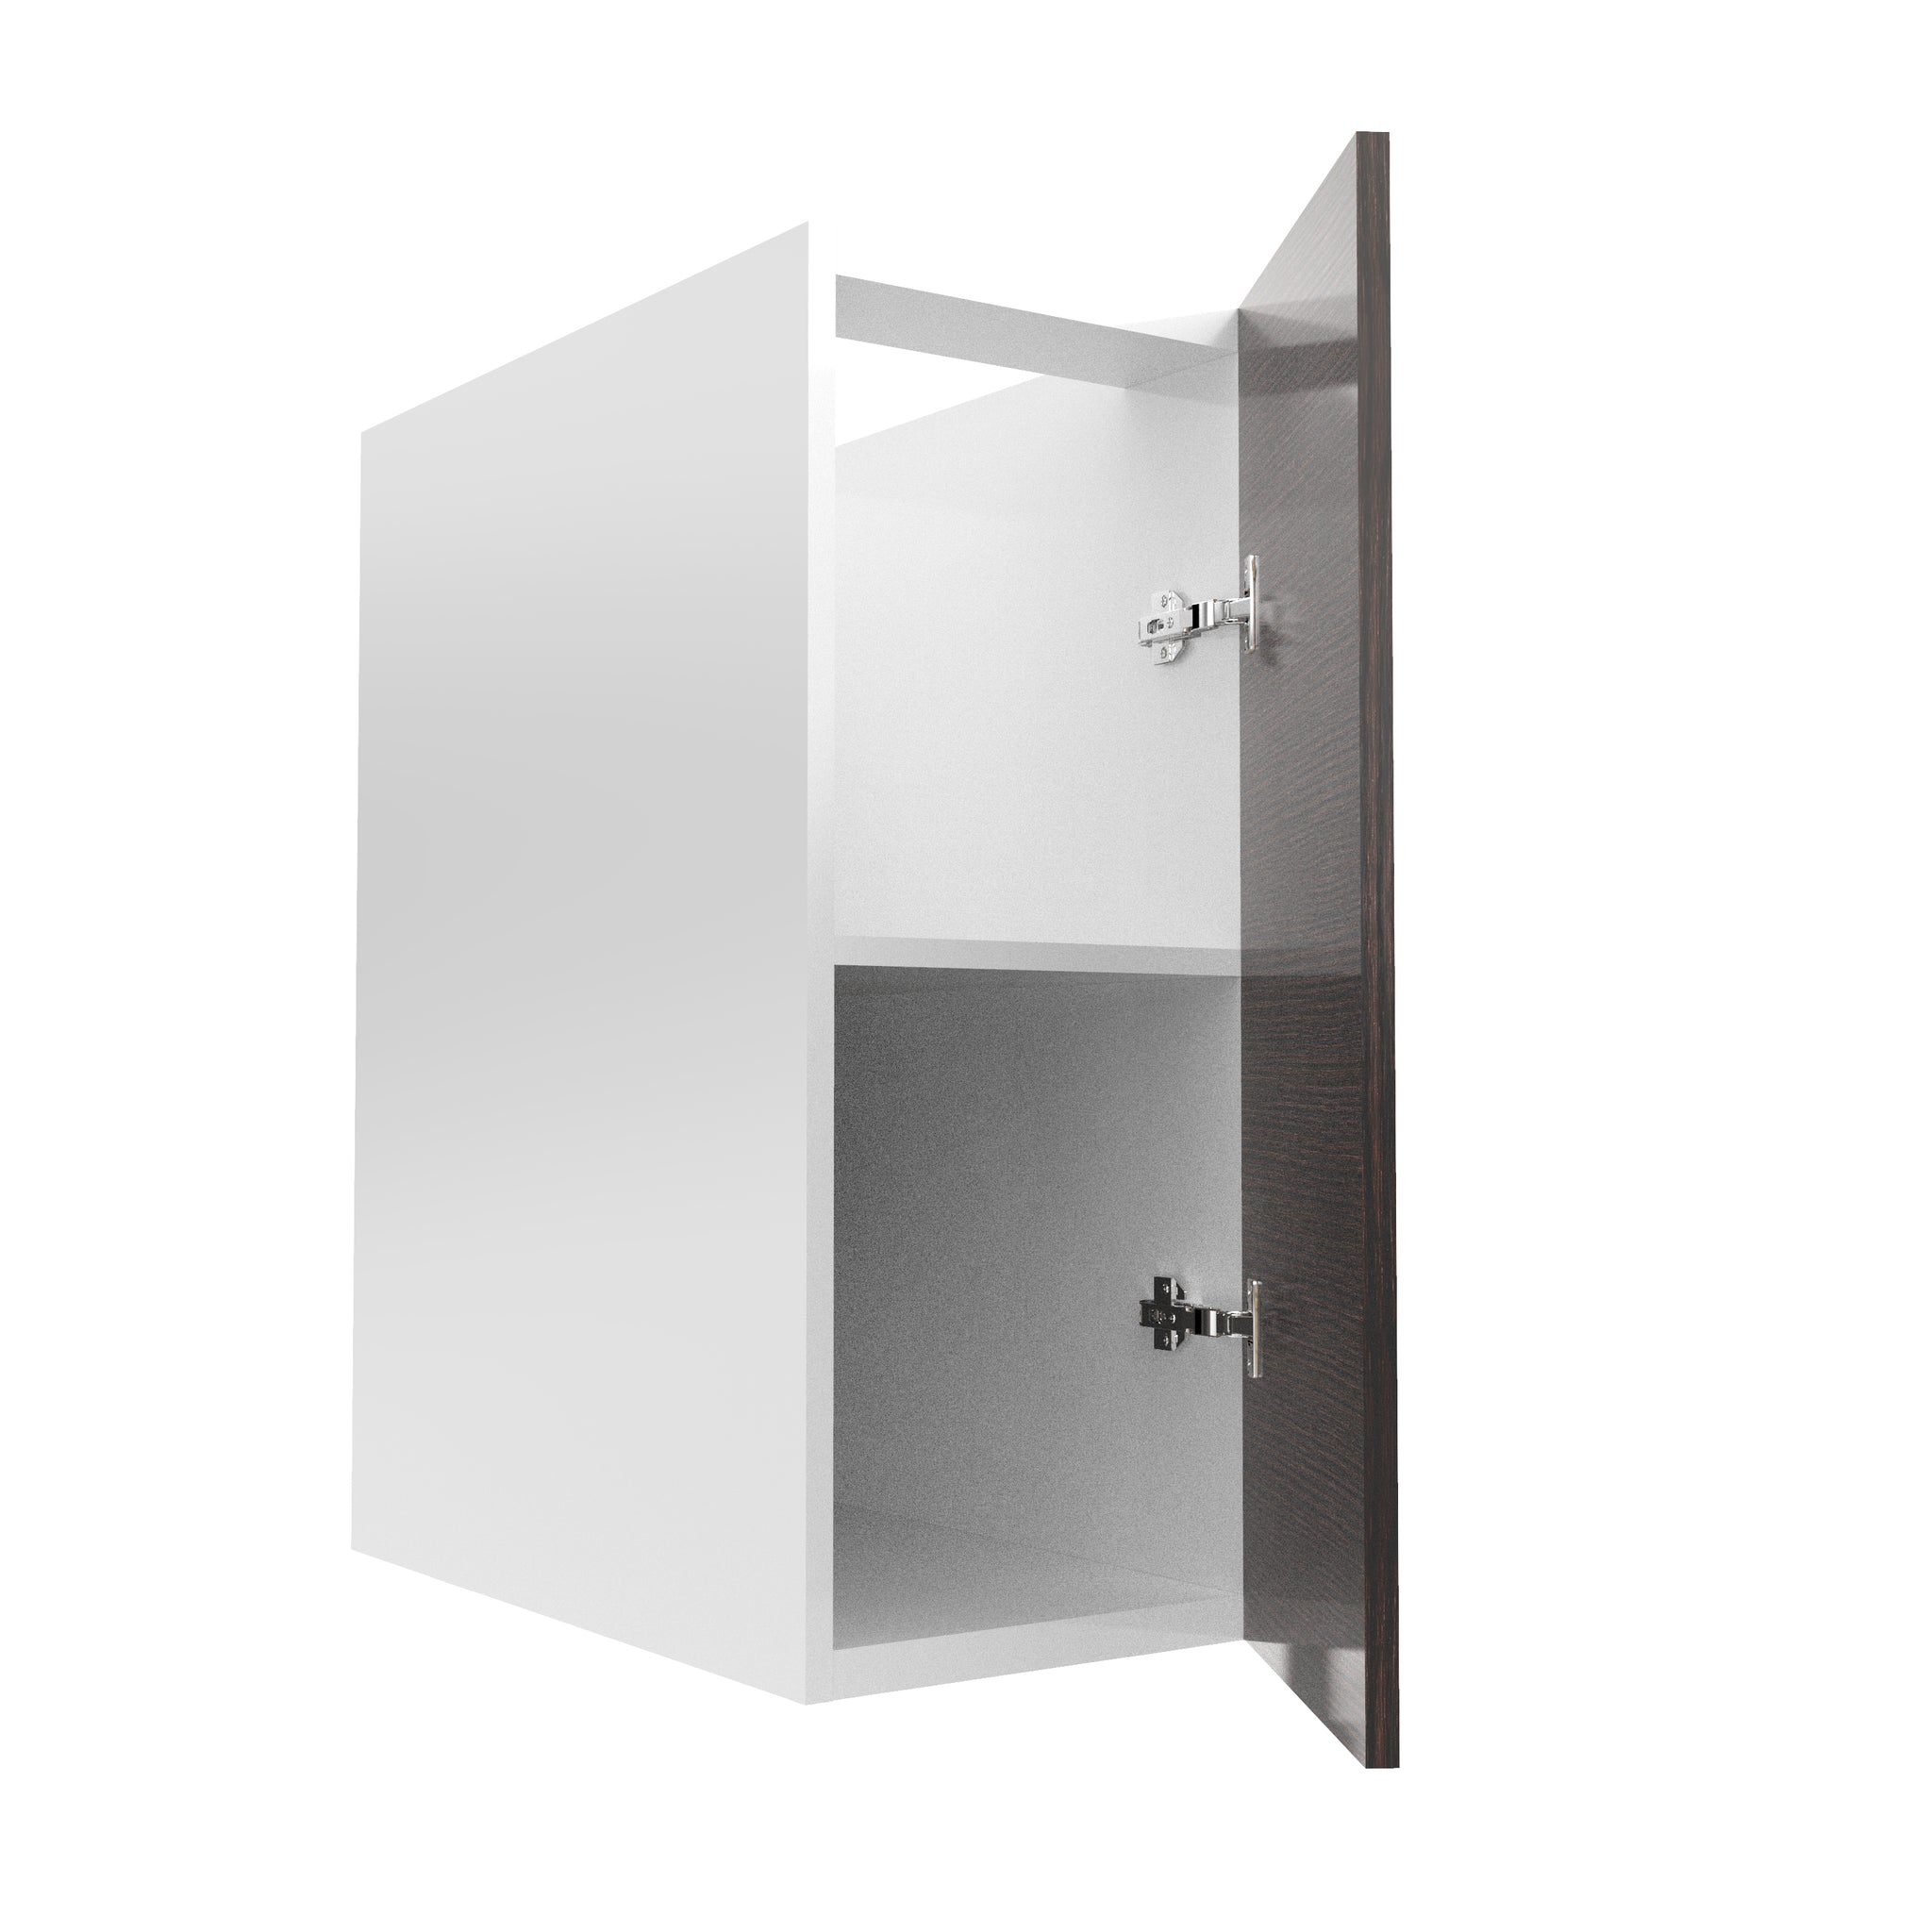 RTA - Brown Oak - Full Height Single Door Base Cabinets | 12"W x 30"H x 23.8"D